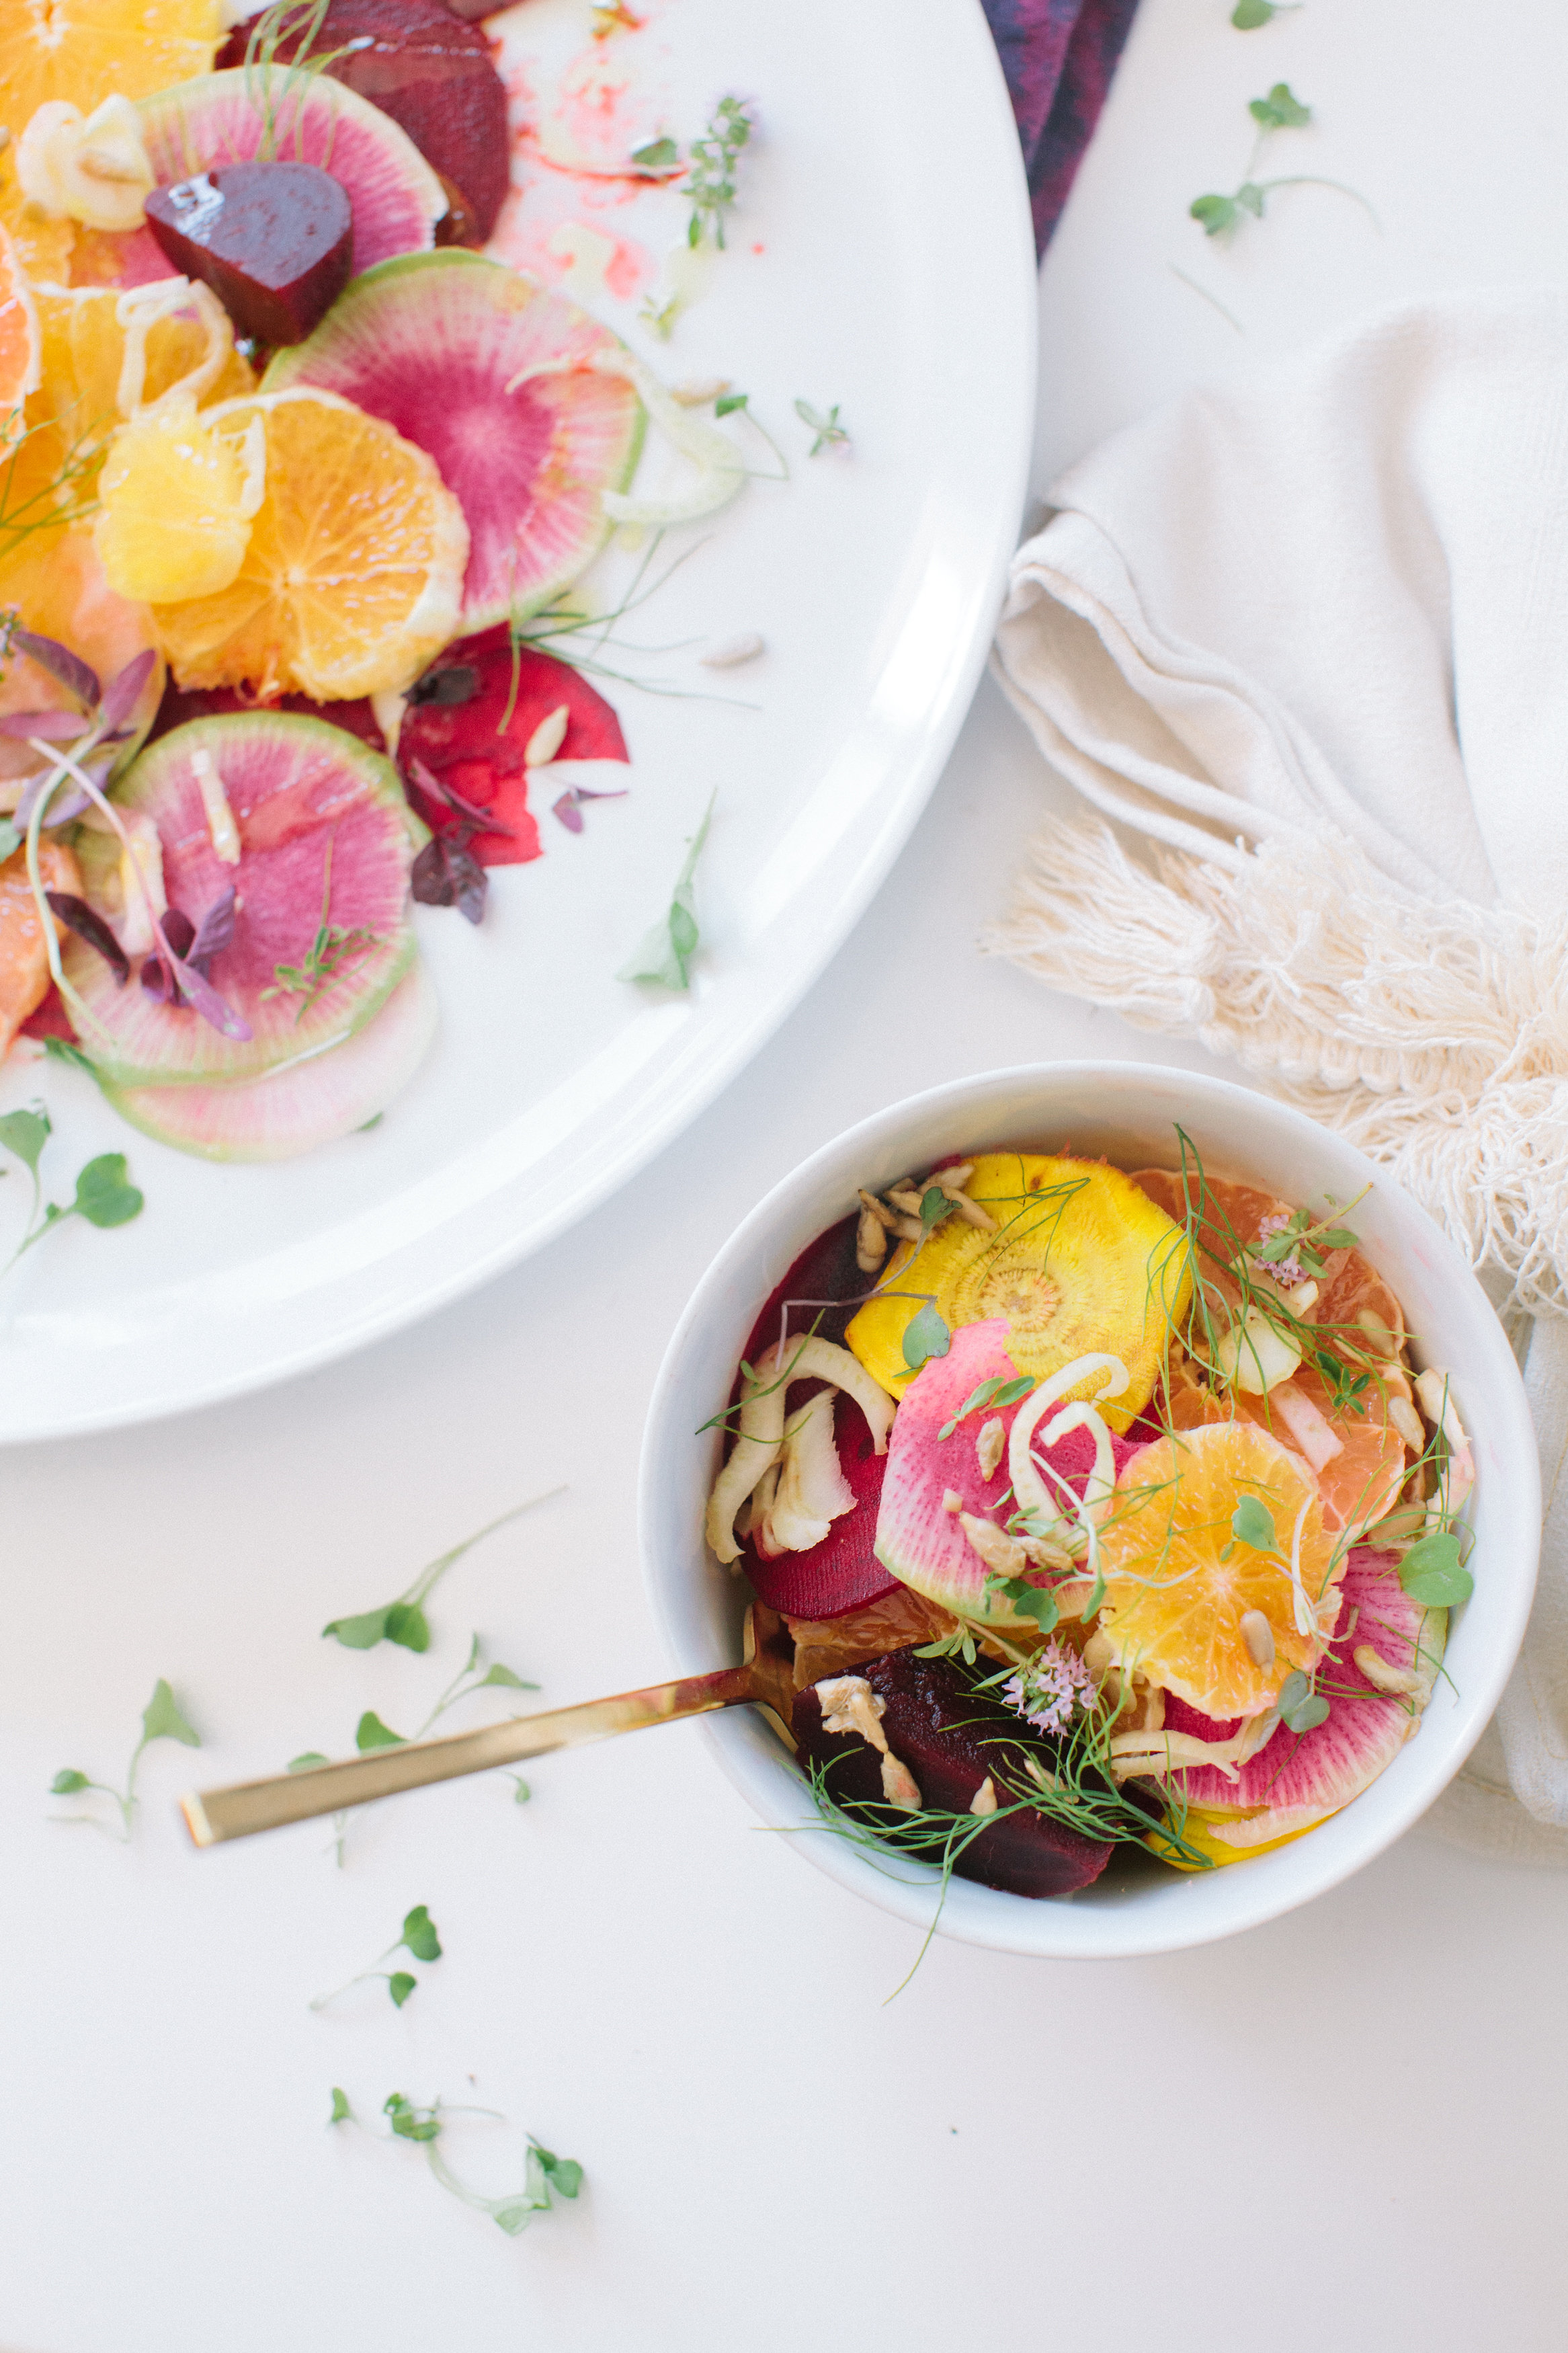 Healthy Eats – Colorful Summer Citrus Salad